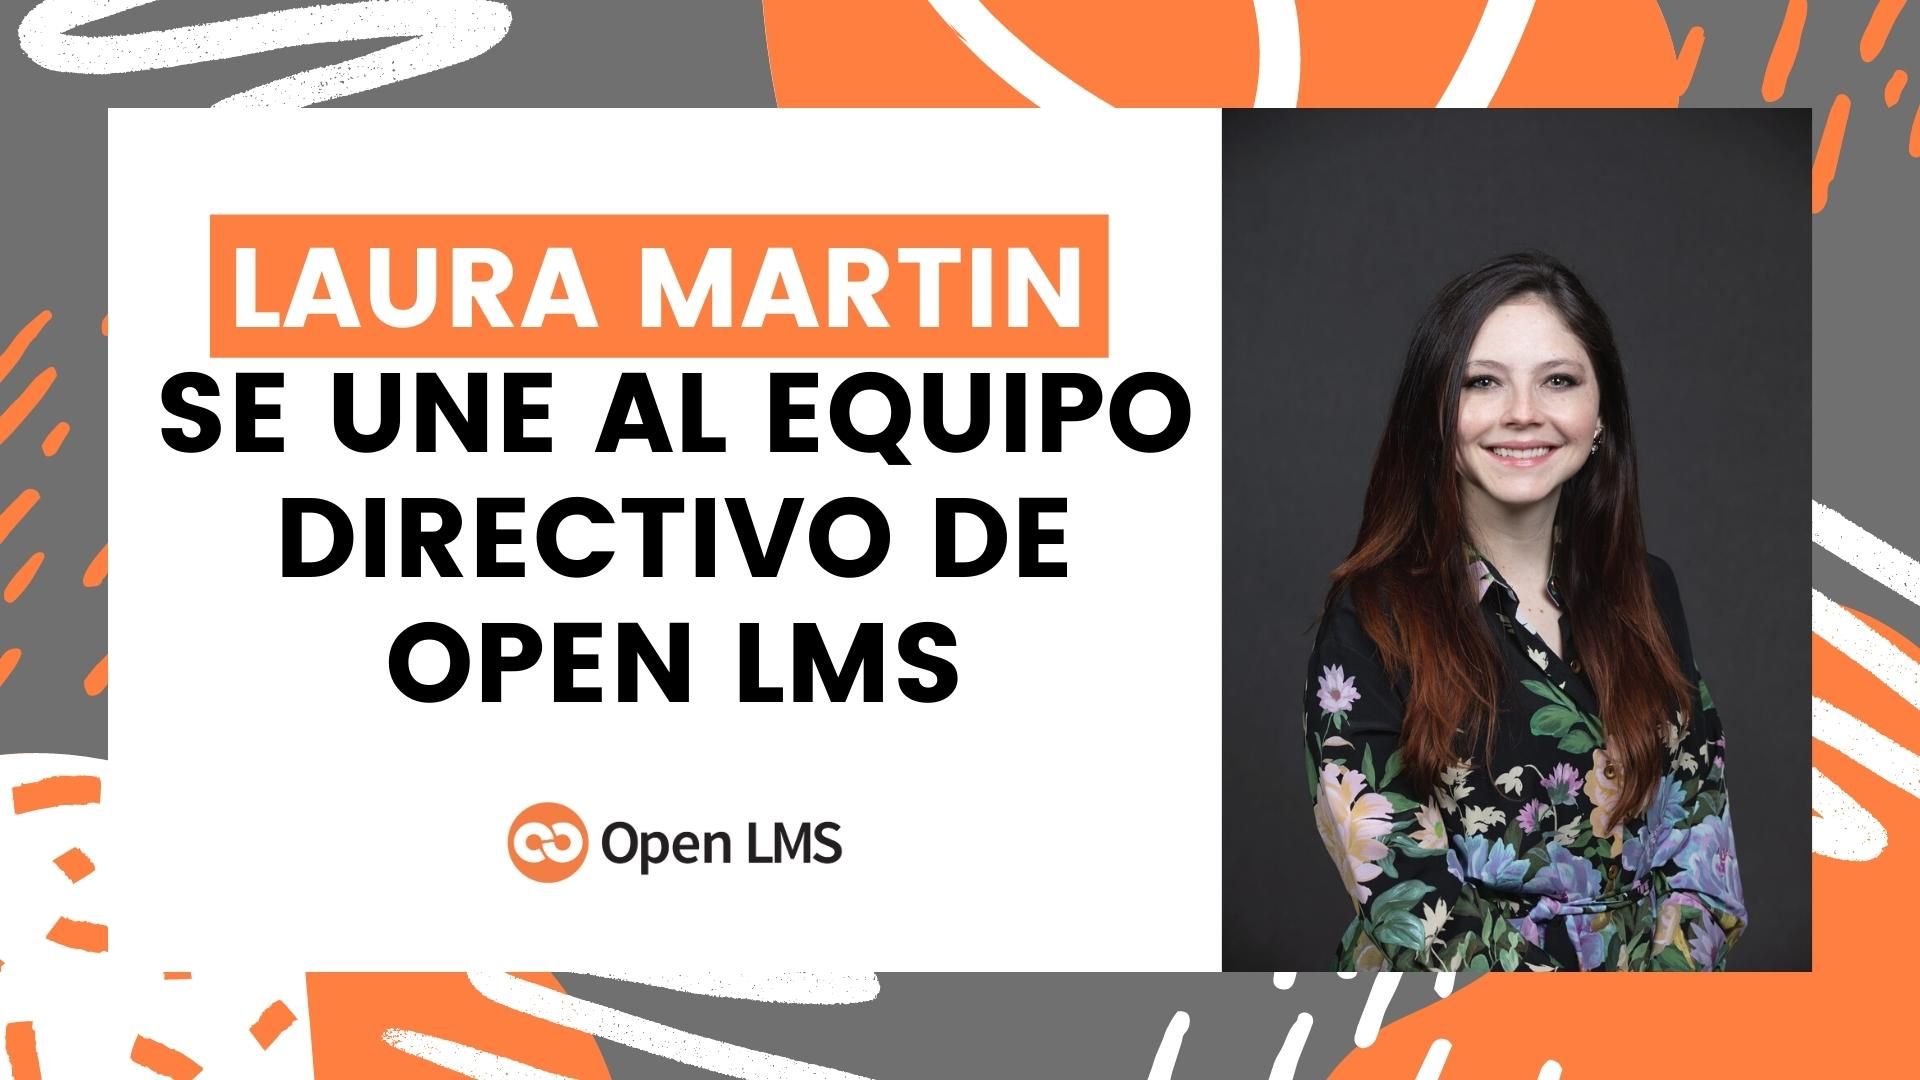 Laura Martin se une al equipo directivo de Open LMS